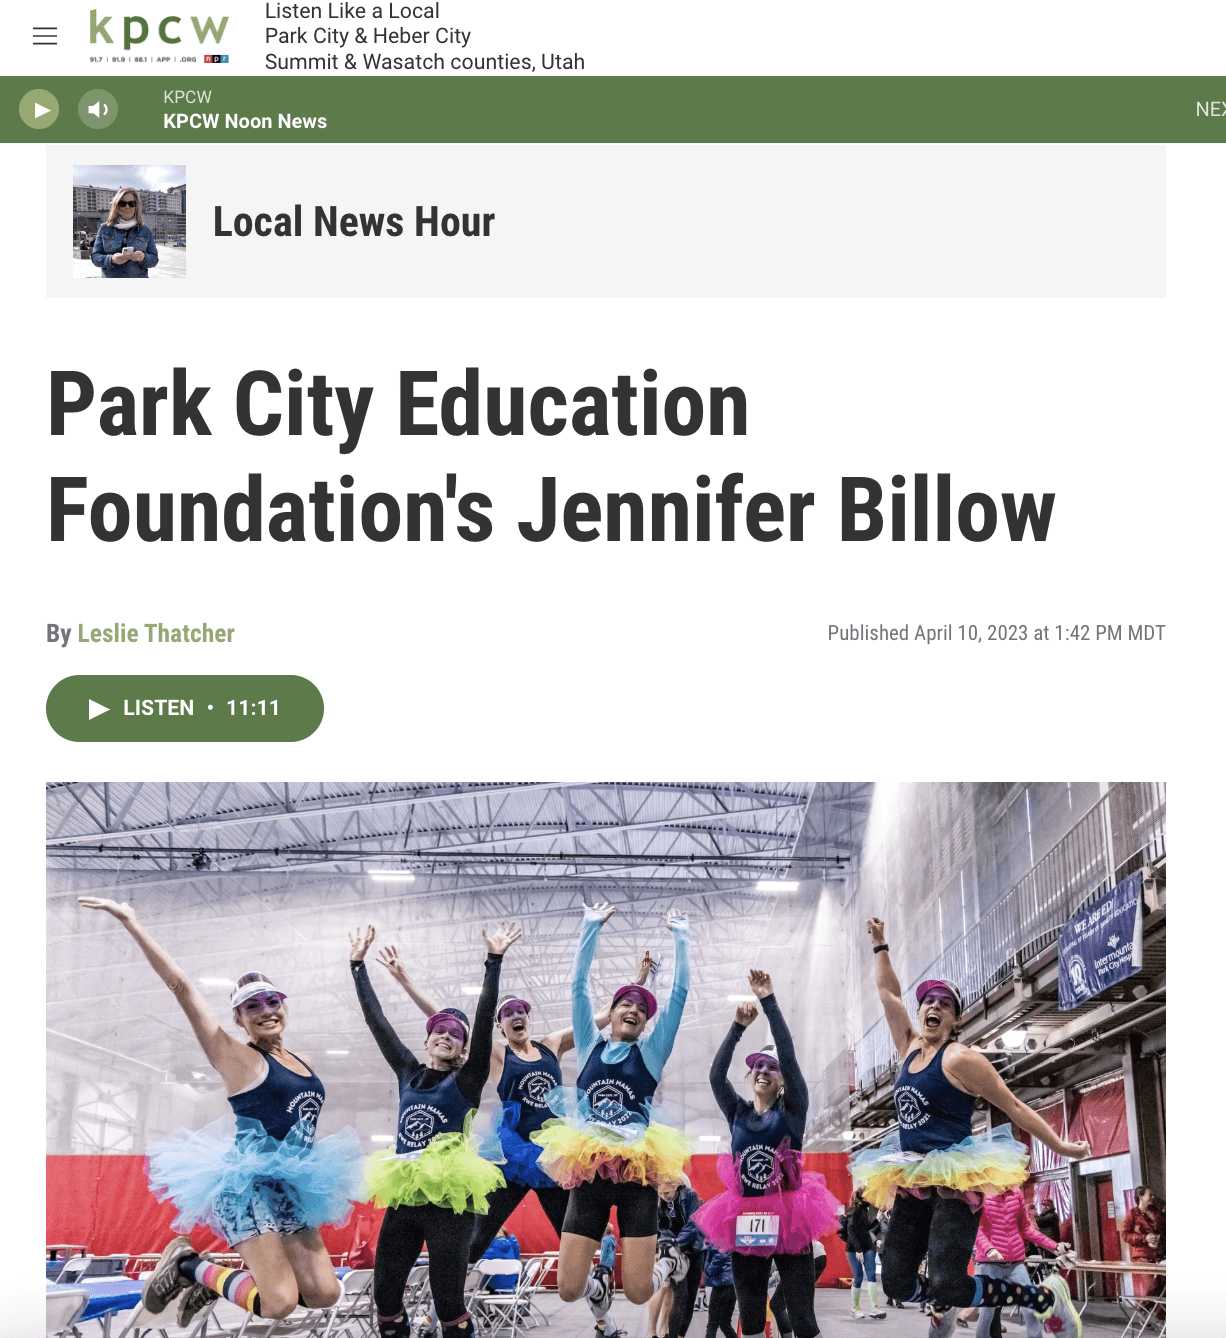 Park City Education Foundation's Jennifer Billow on KPCW